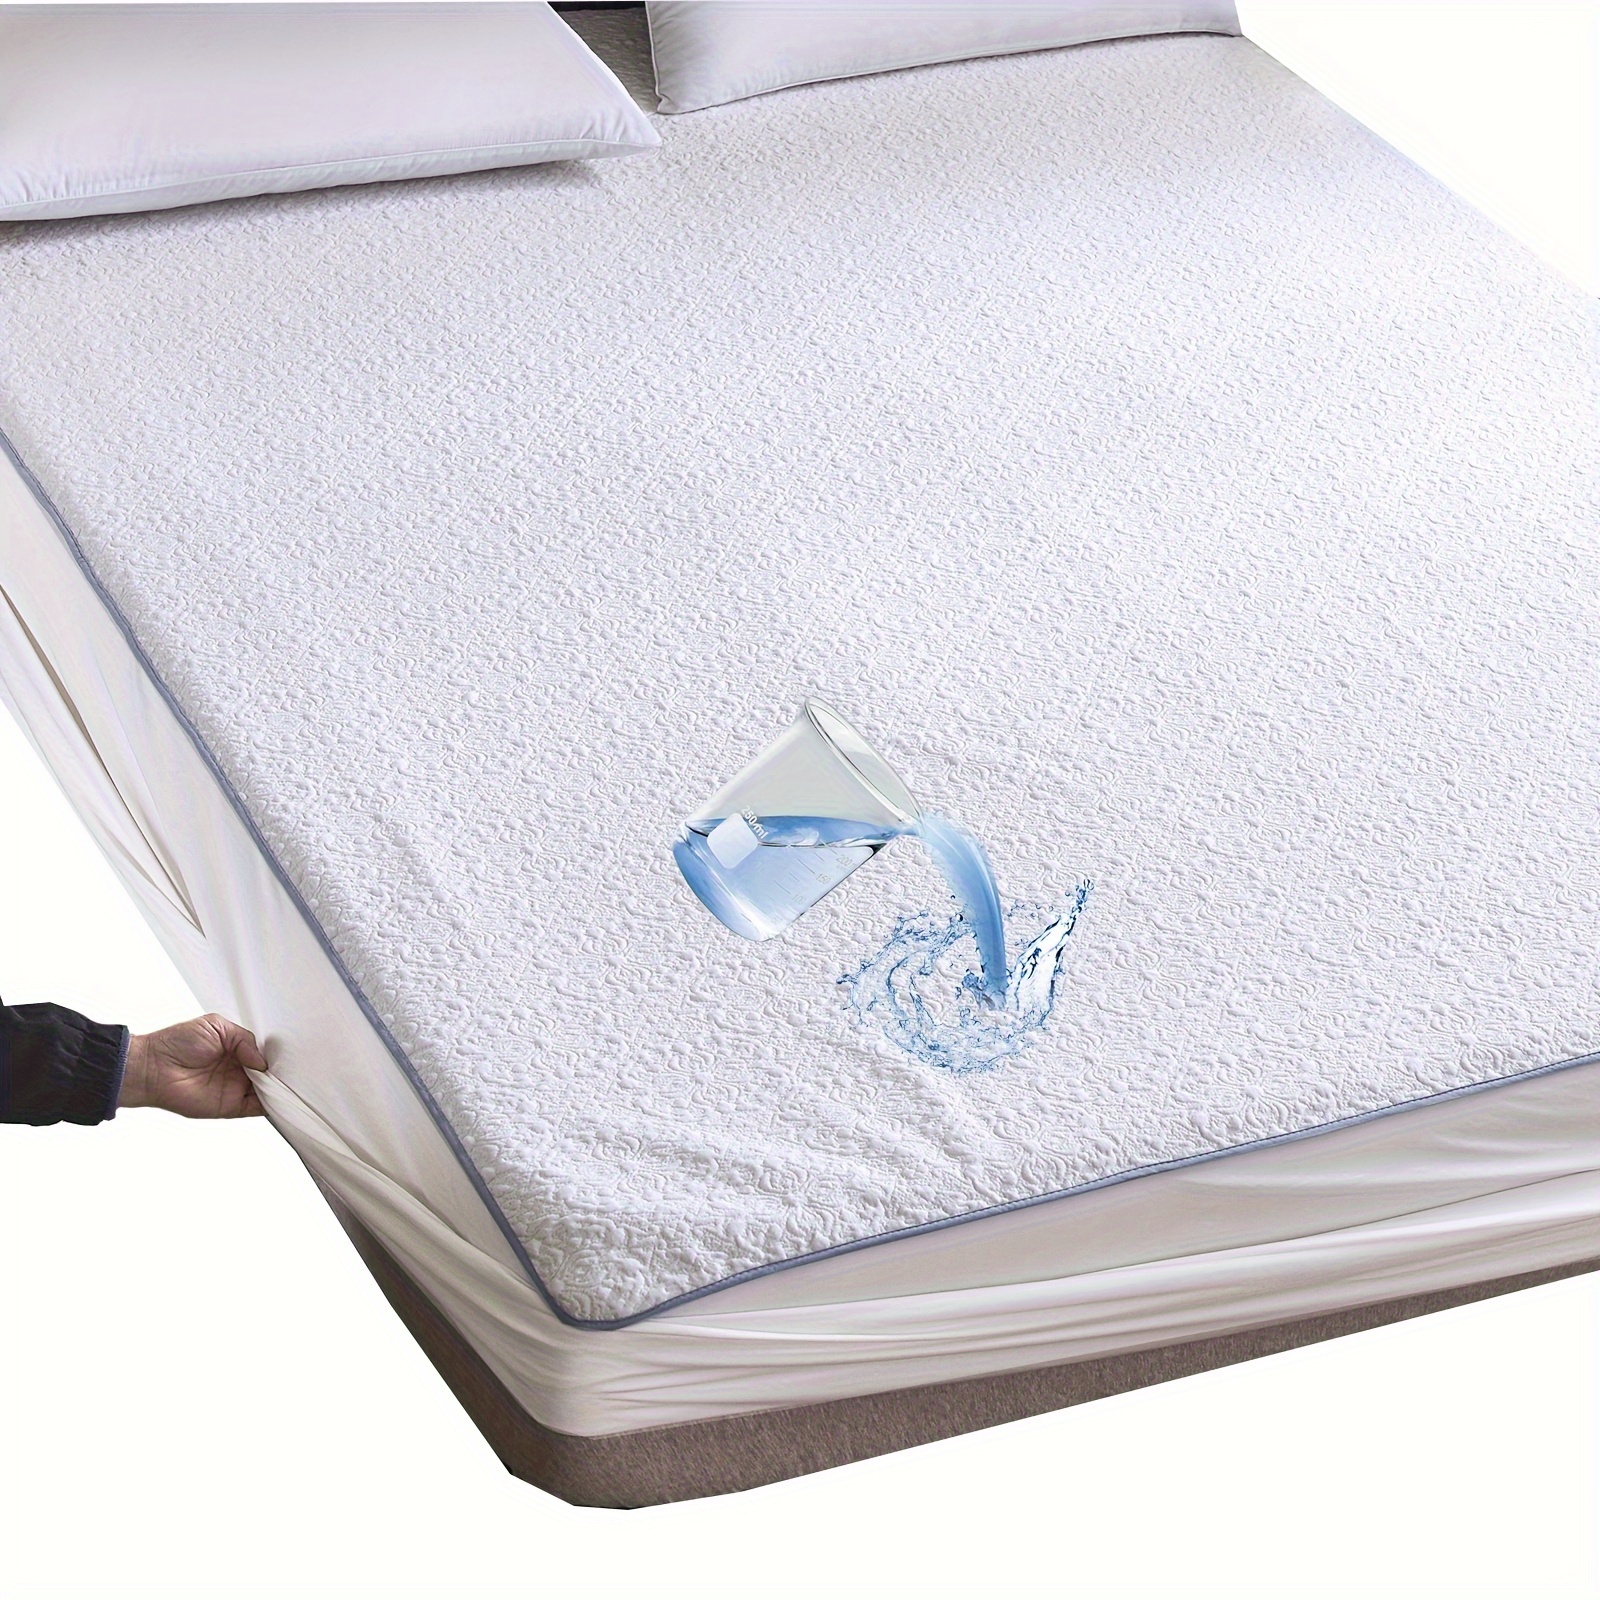 Protector de cama - Funda de colchón hipoalergénica contra